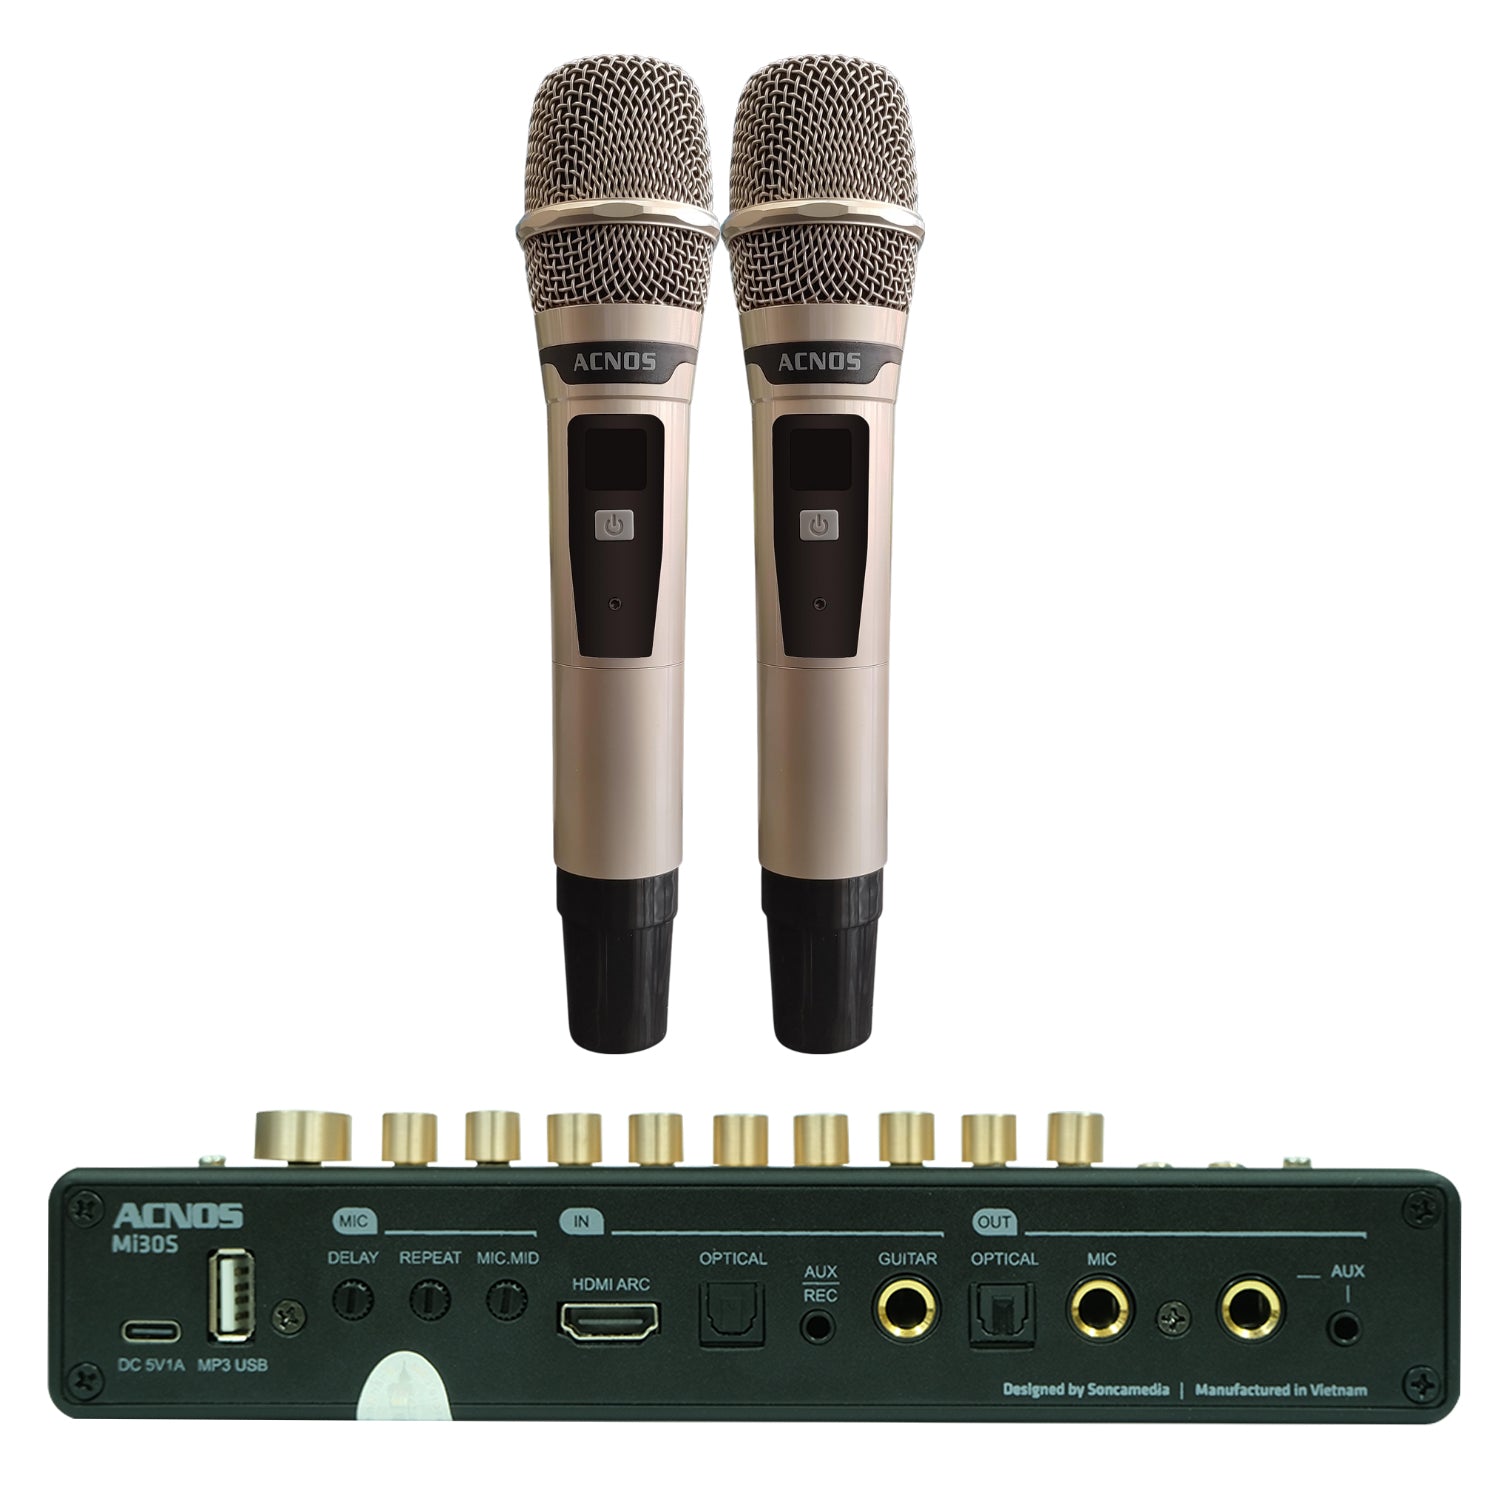 ACNOS SK9018PLUS + Mi-30s Mixer + Wireless Microphones (Package Deal) - Karaoke Home Entertainment